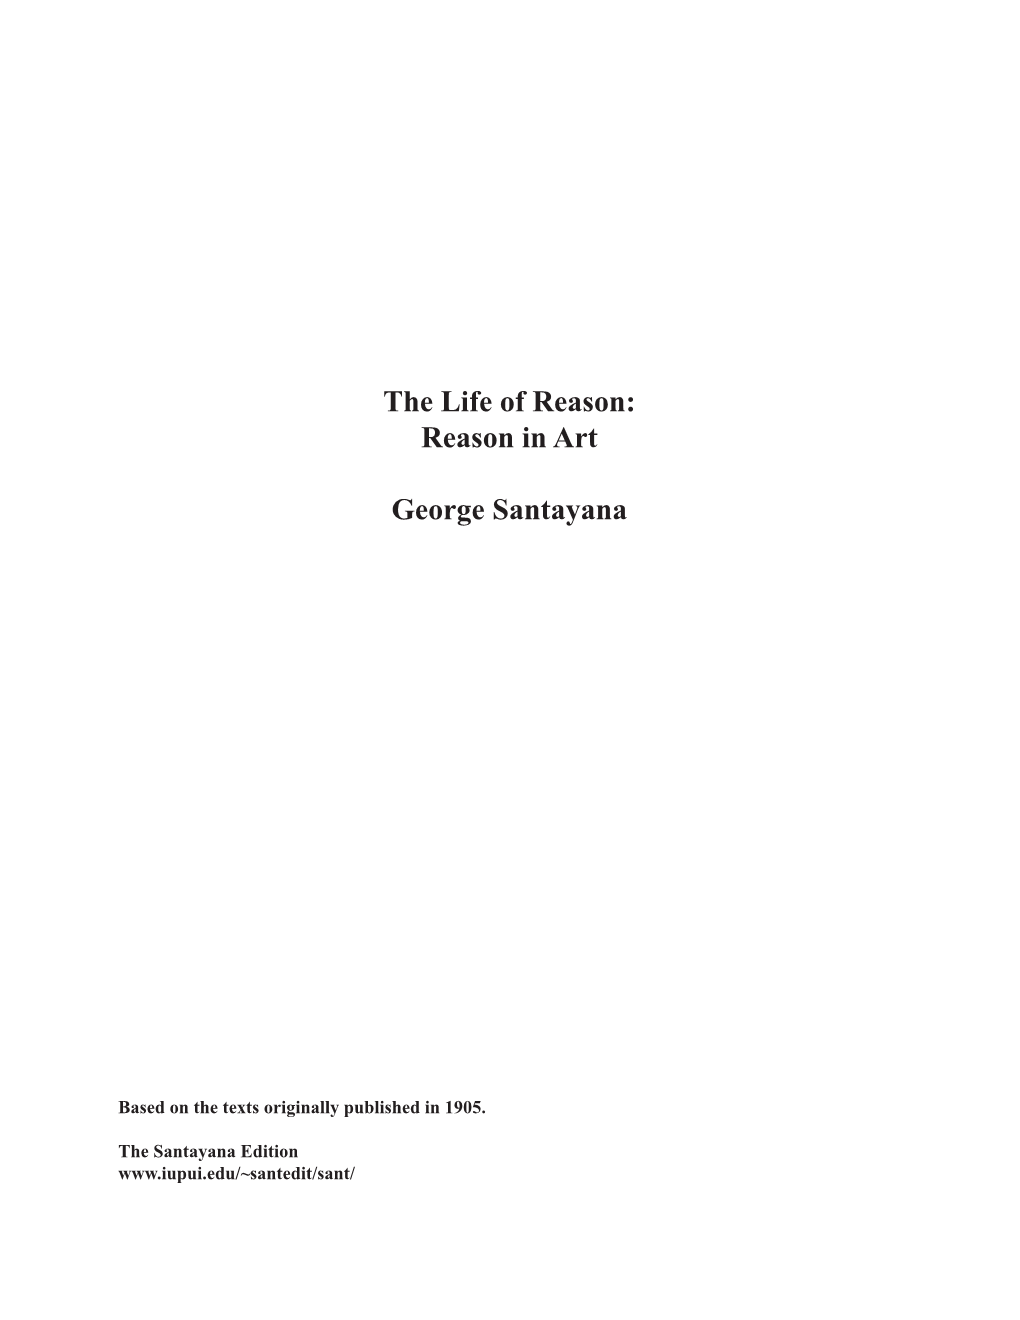 The Life of Reason: Reason in Art George Santayana